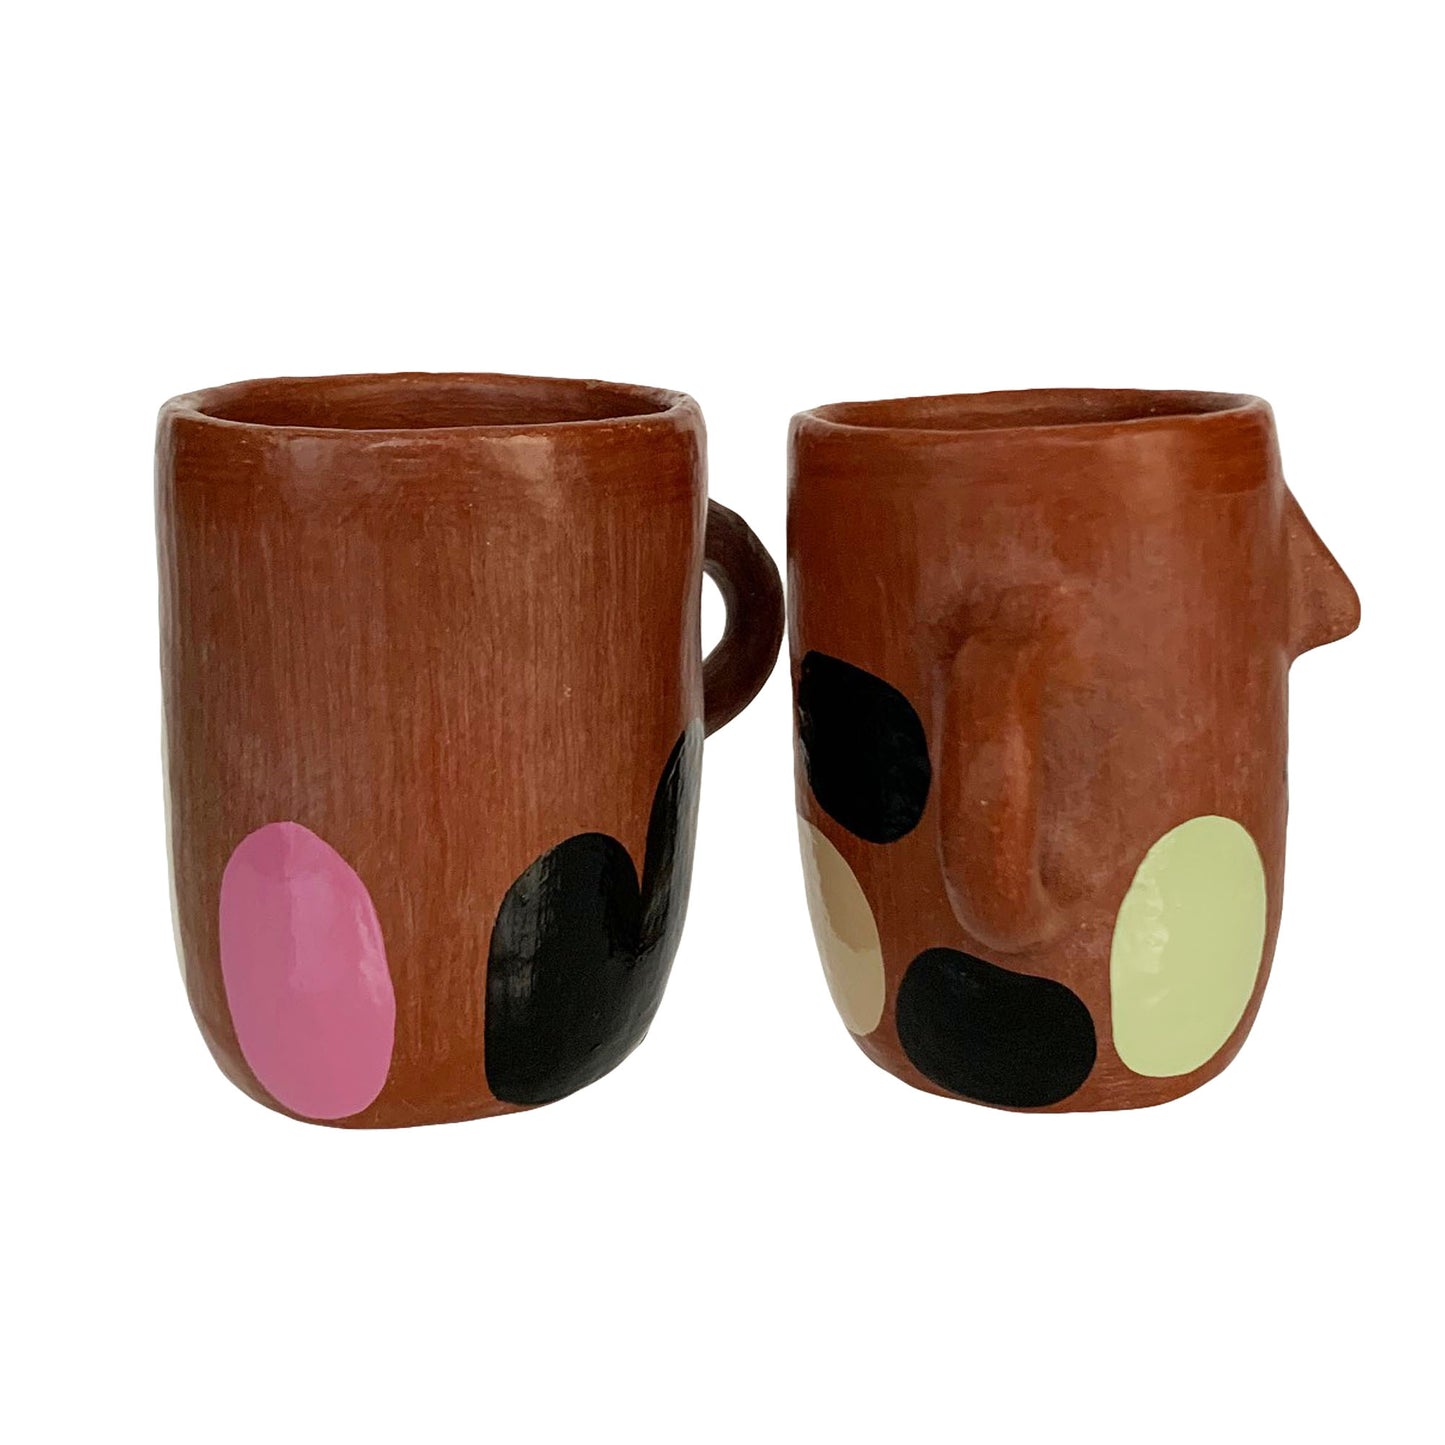 Painted Ladies - Red Clay Mug Handmade in Oaxaca, Mexico